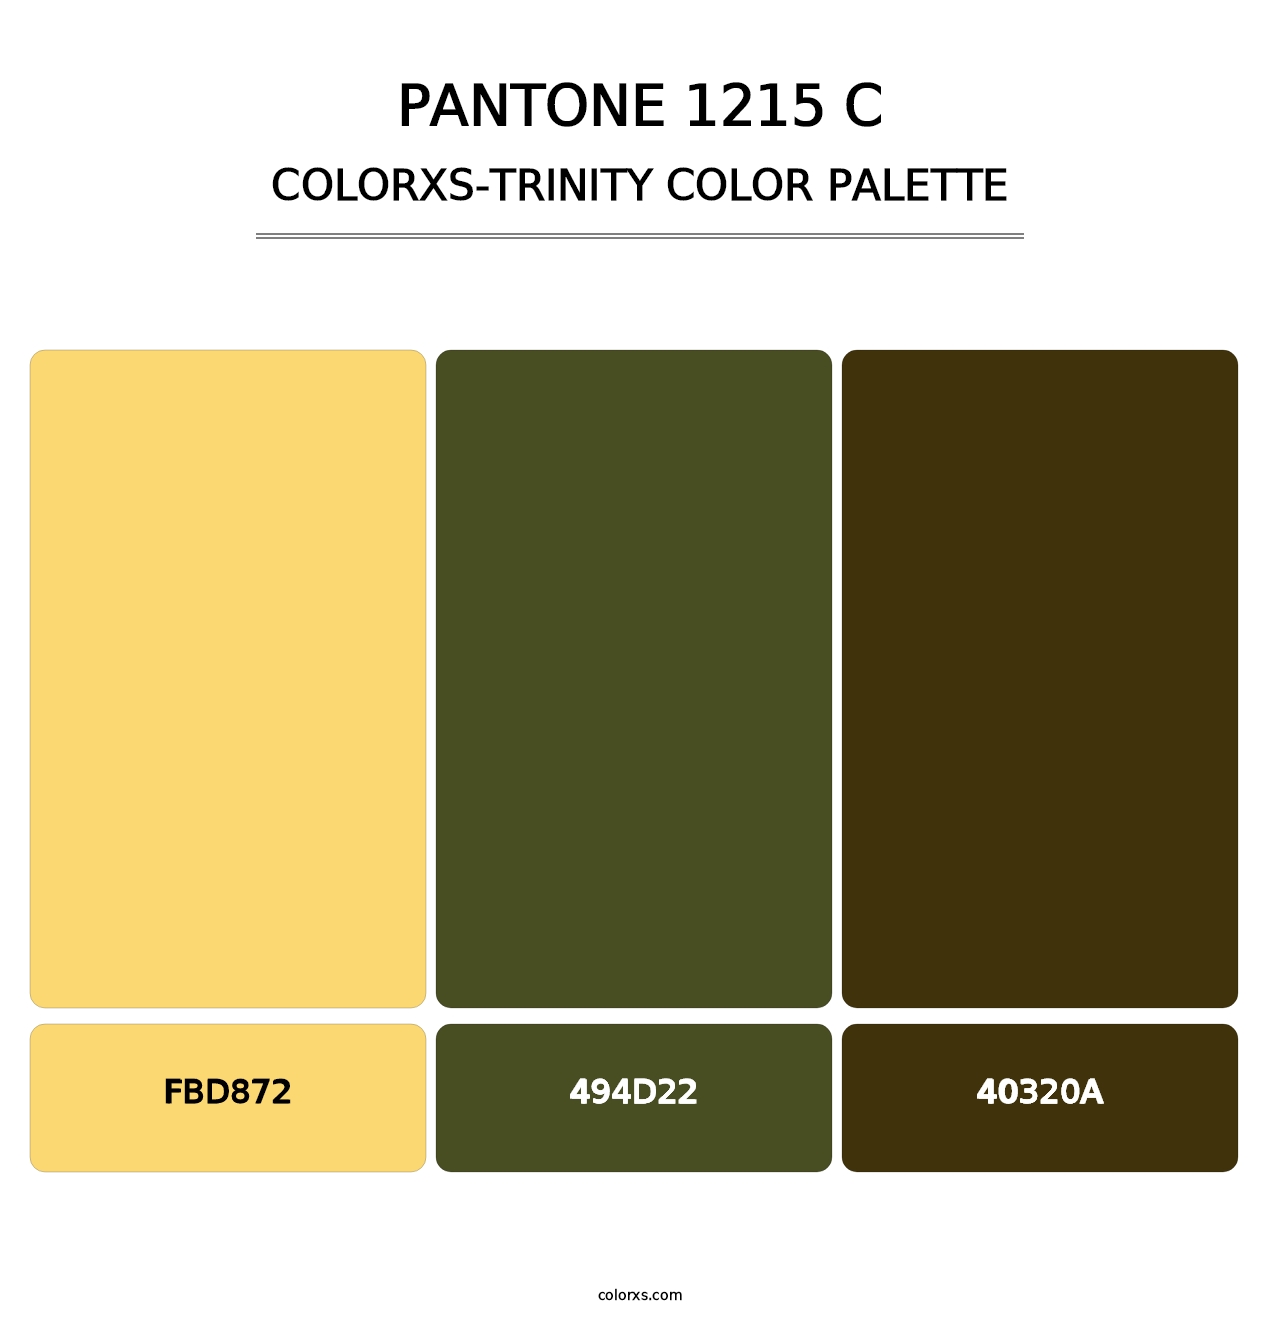 PANTONE 1215 C - Colorxs Trinity Palette